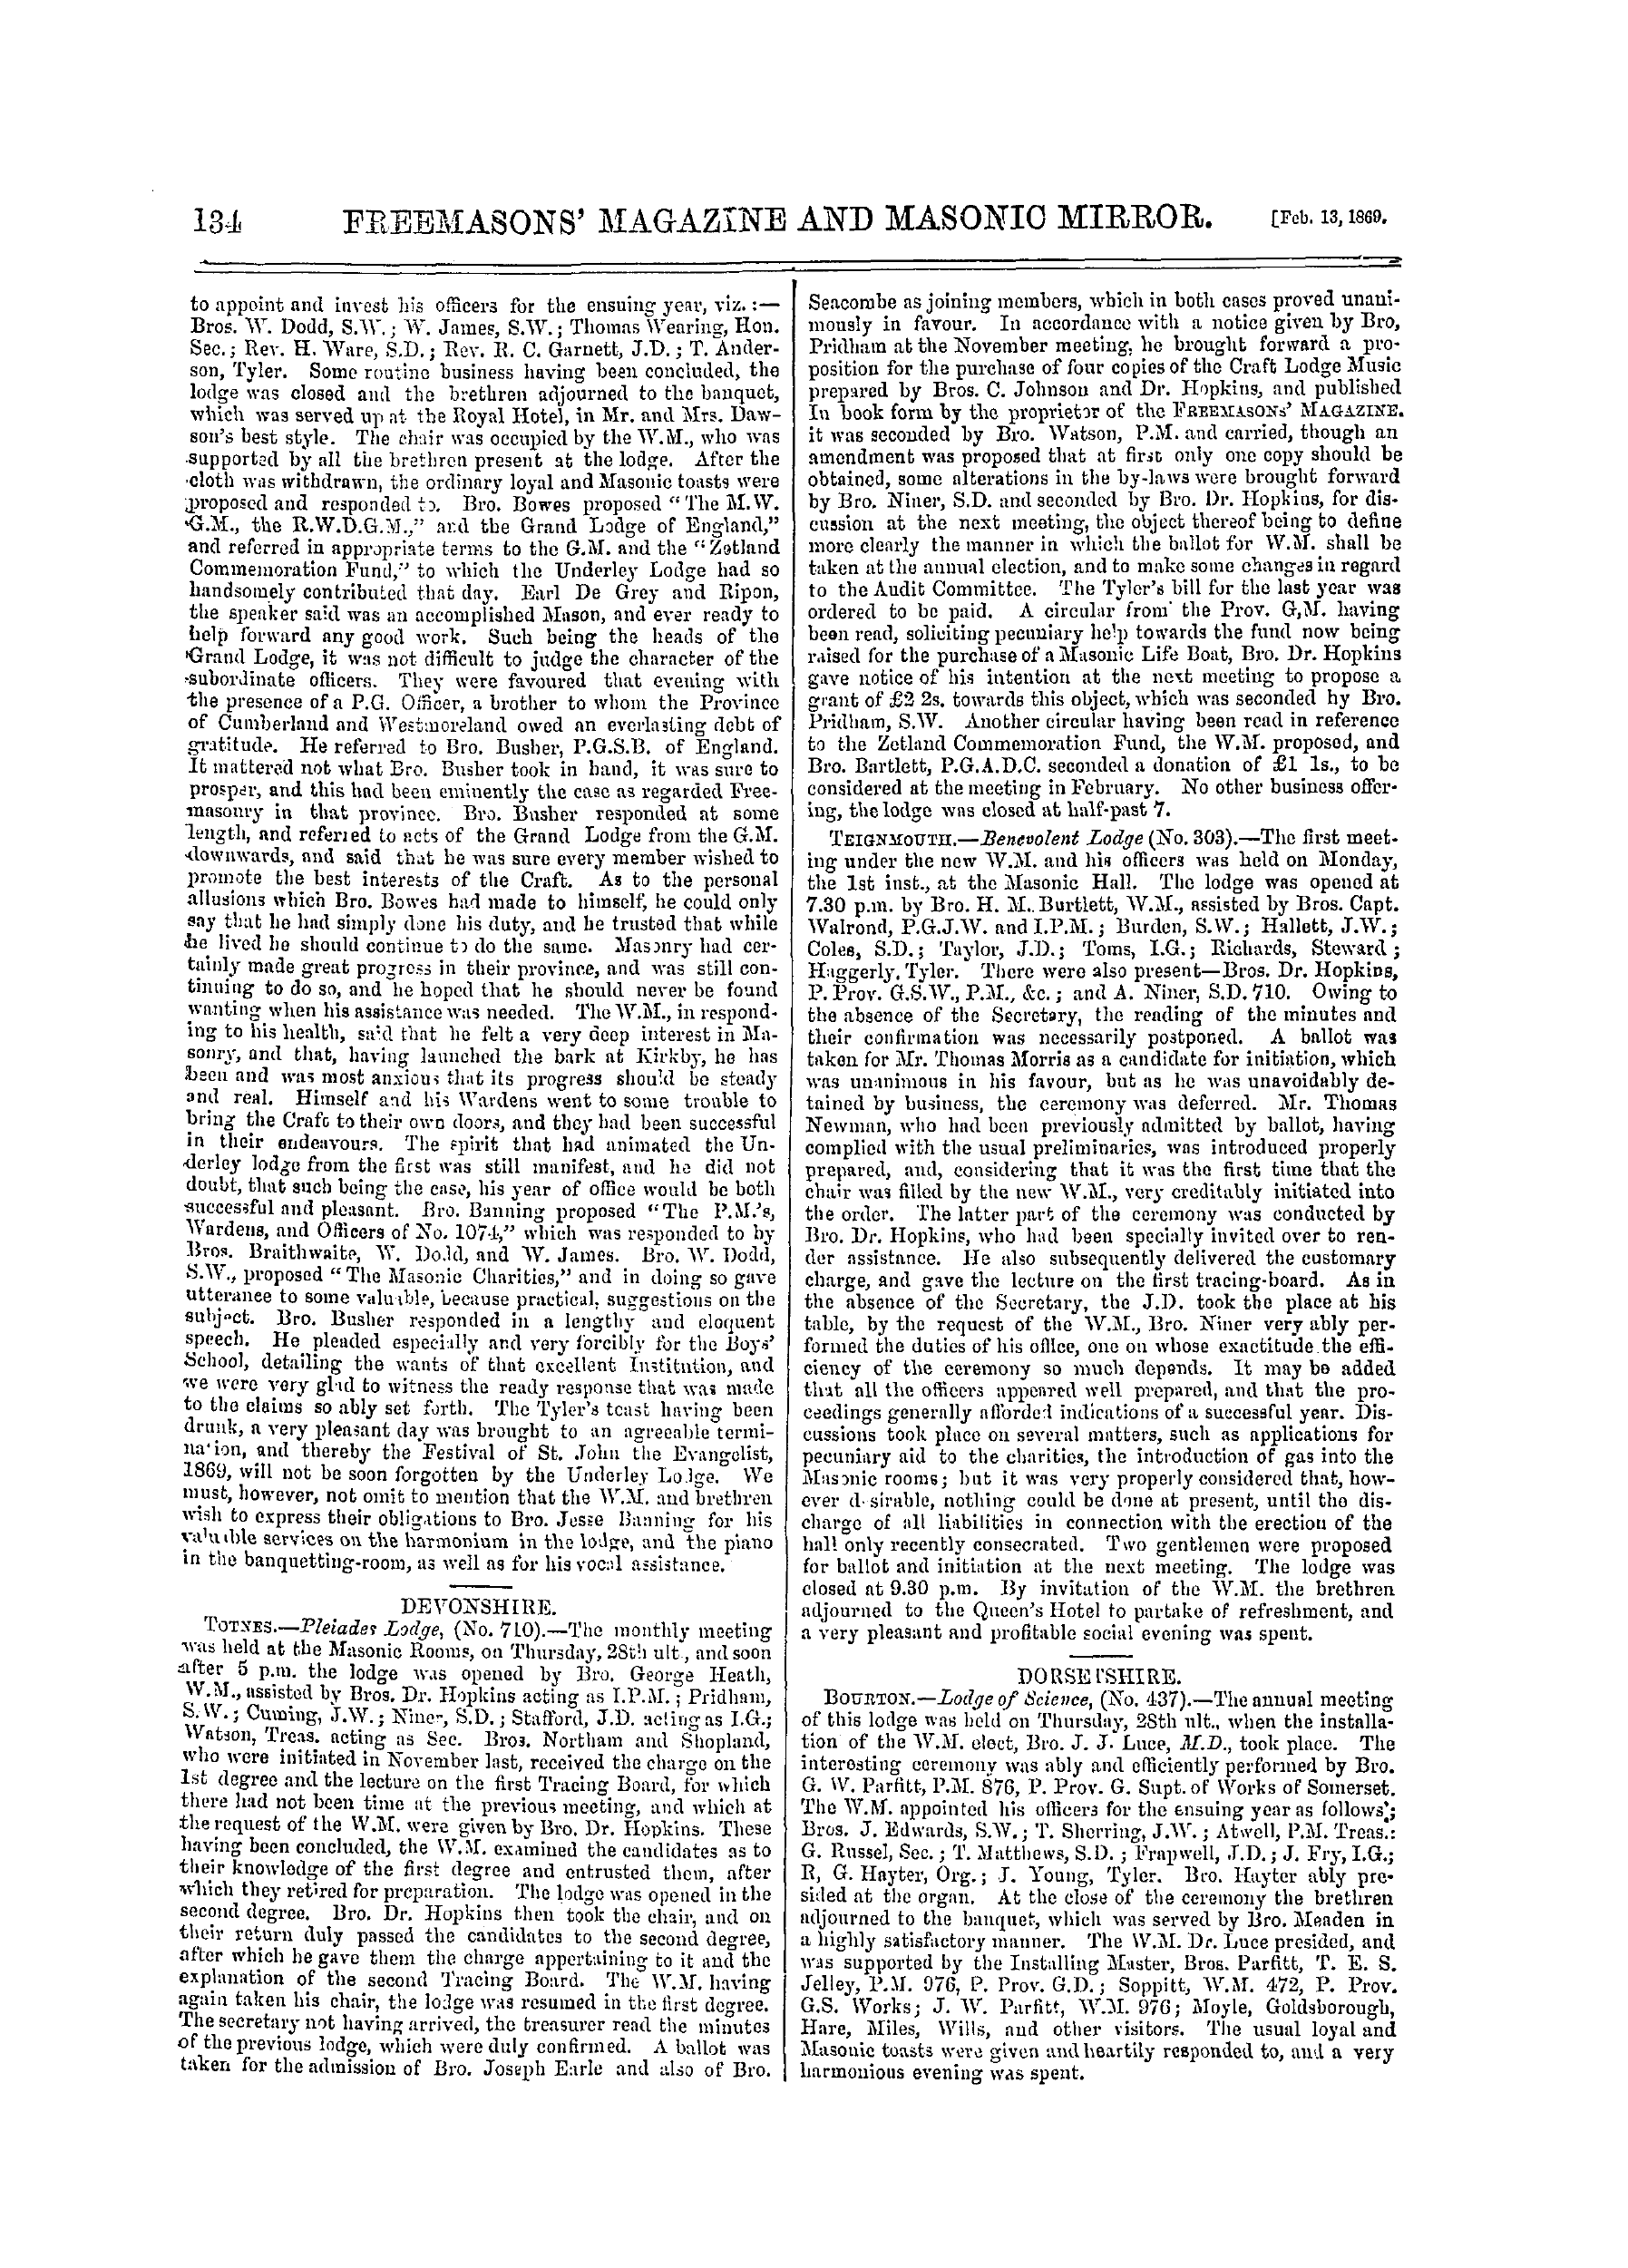 The Freemasons' Monthly Magazine: 1869-02-13 - Provincial.